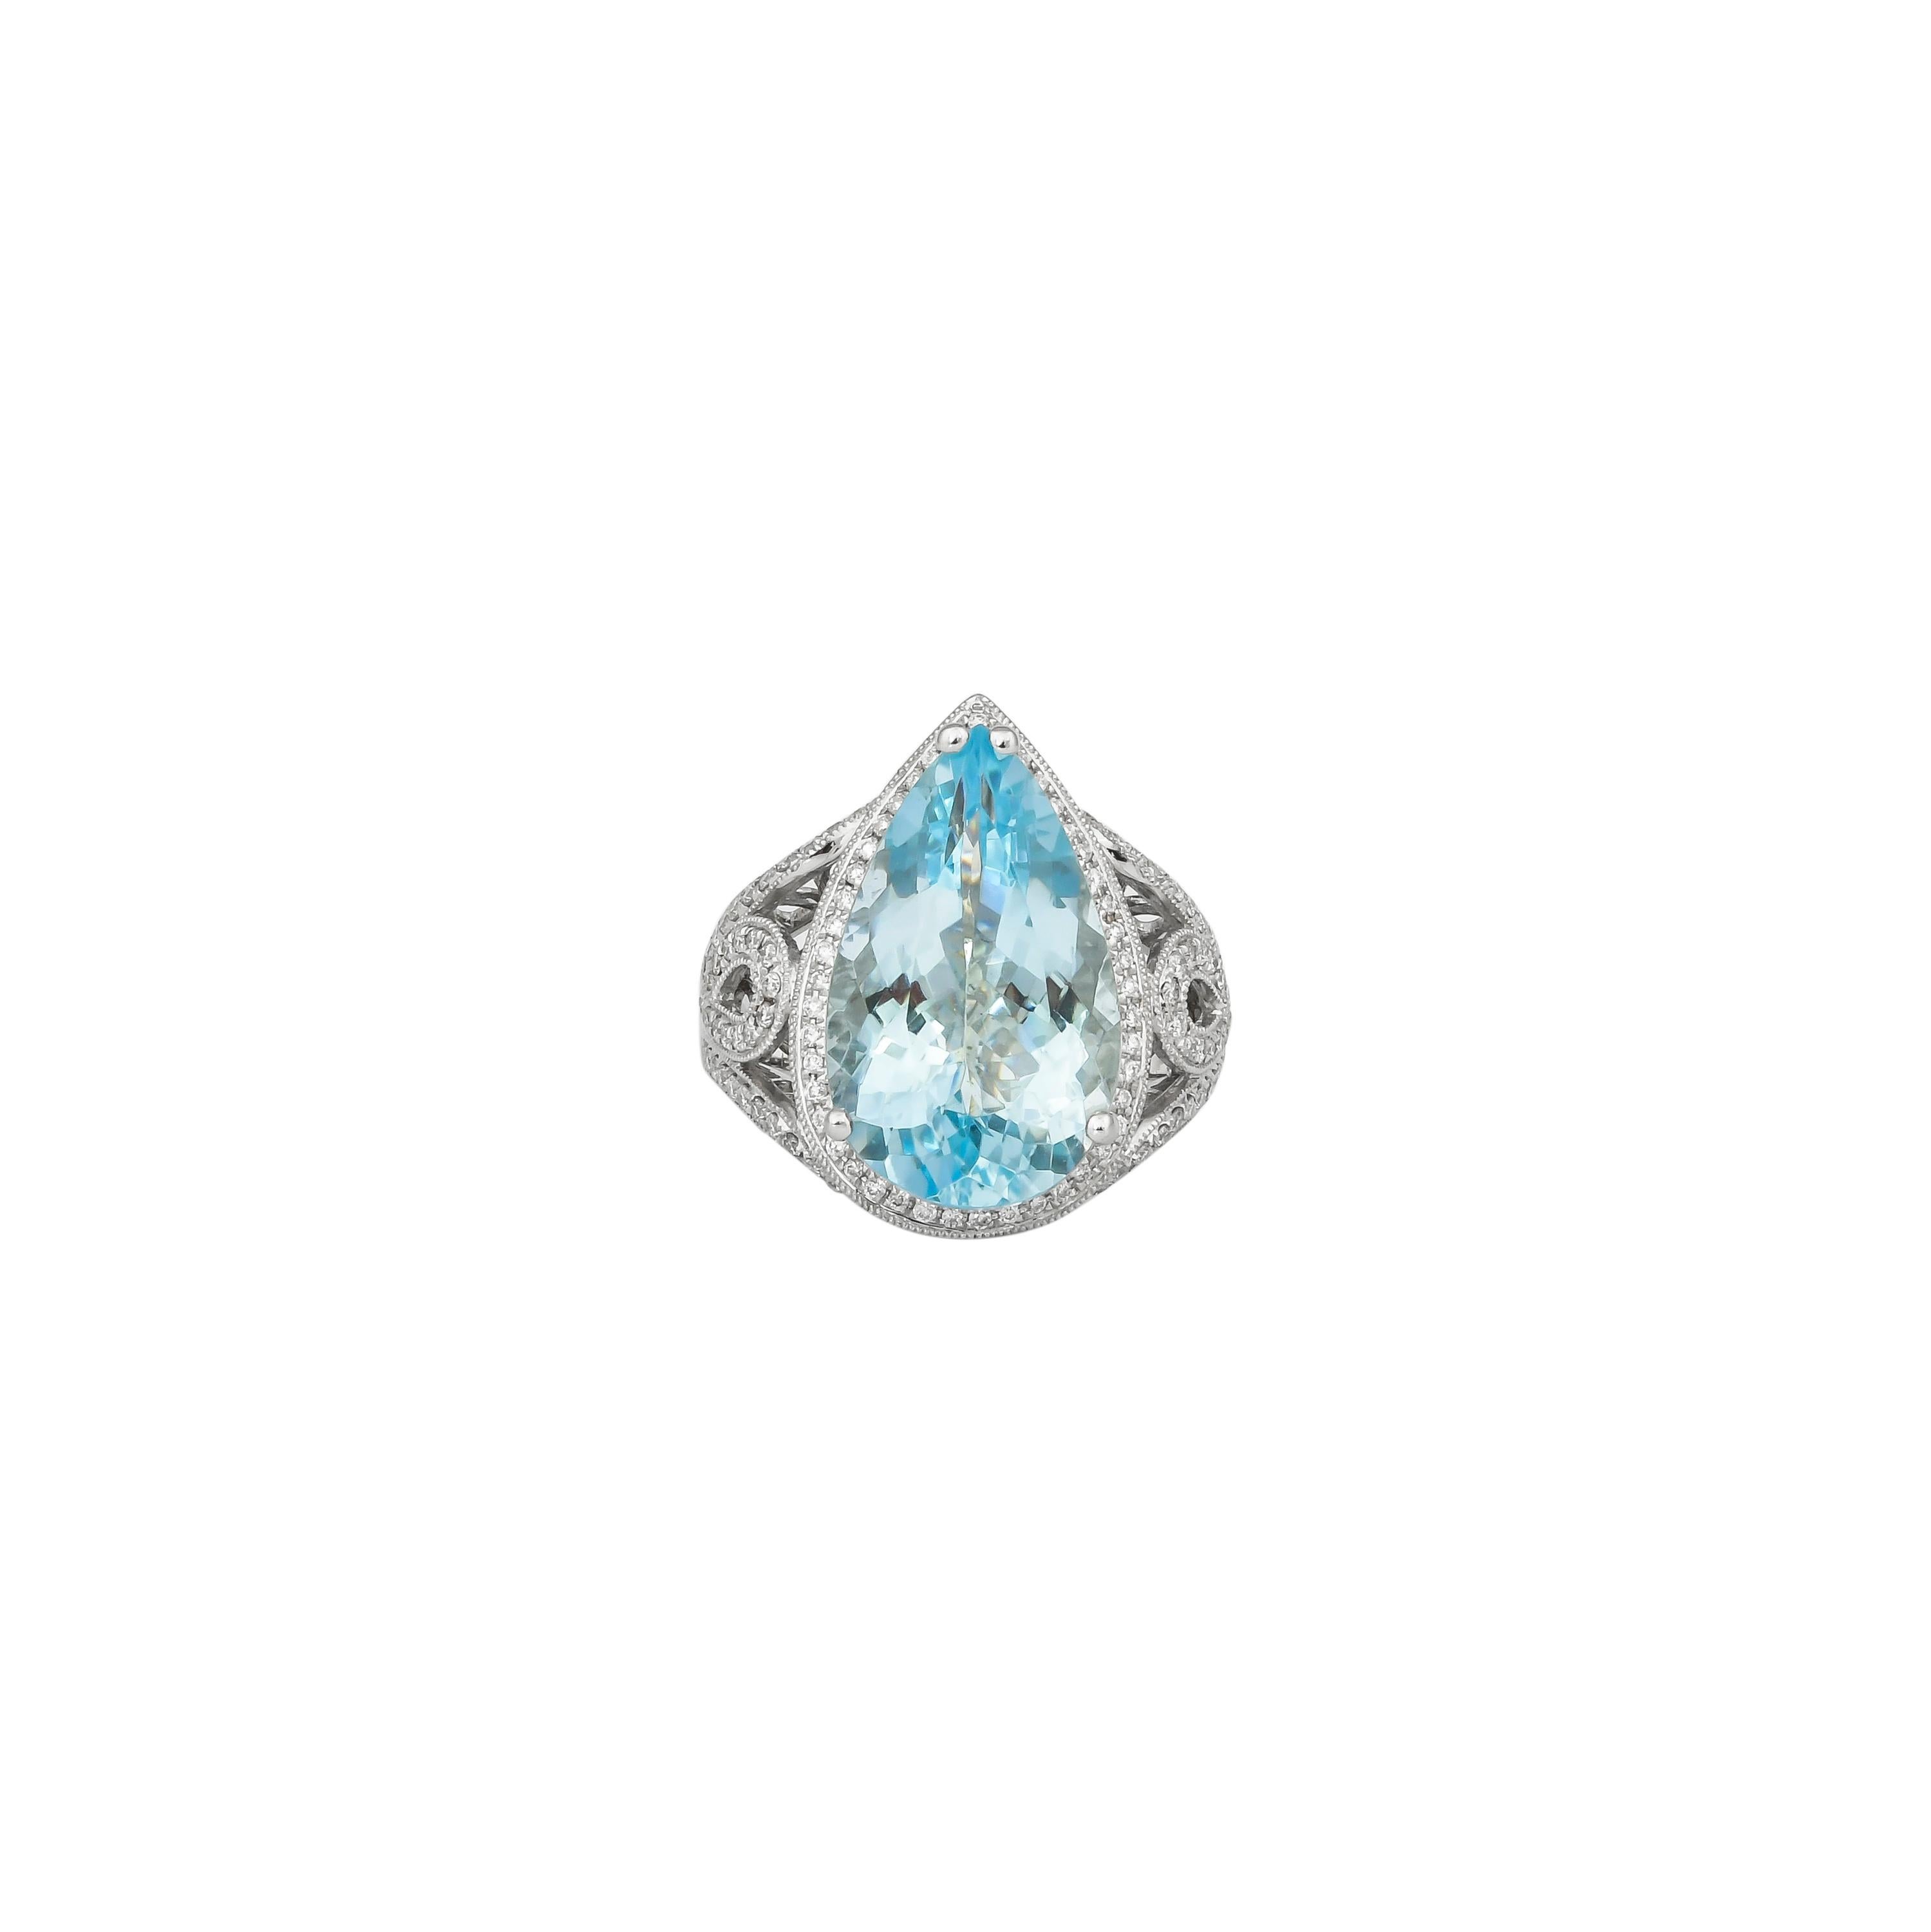 Pear Cut 8.17 Carat Aquamarine and Diamond Ring in 18 Karat White Gold For Sale